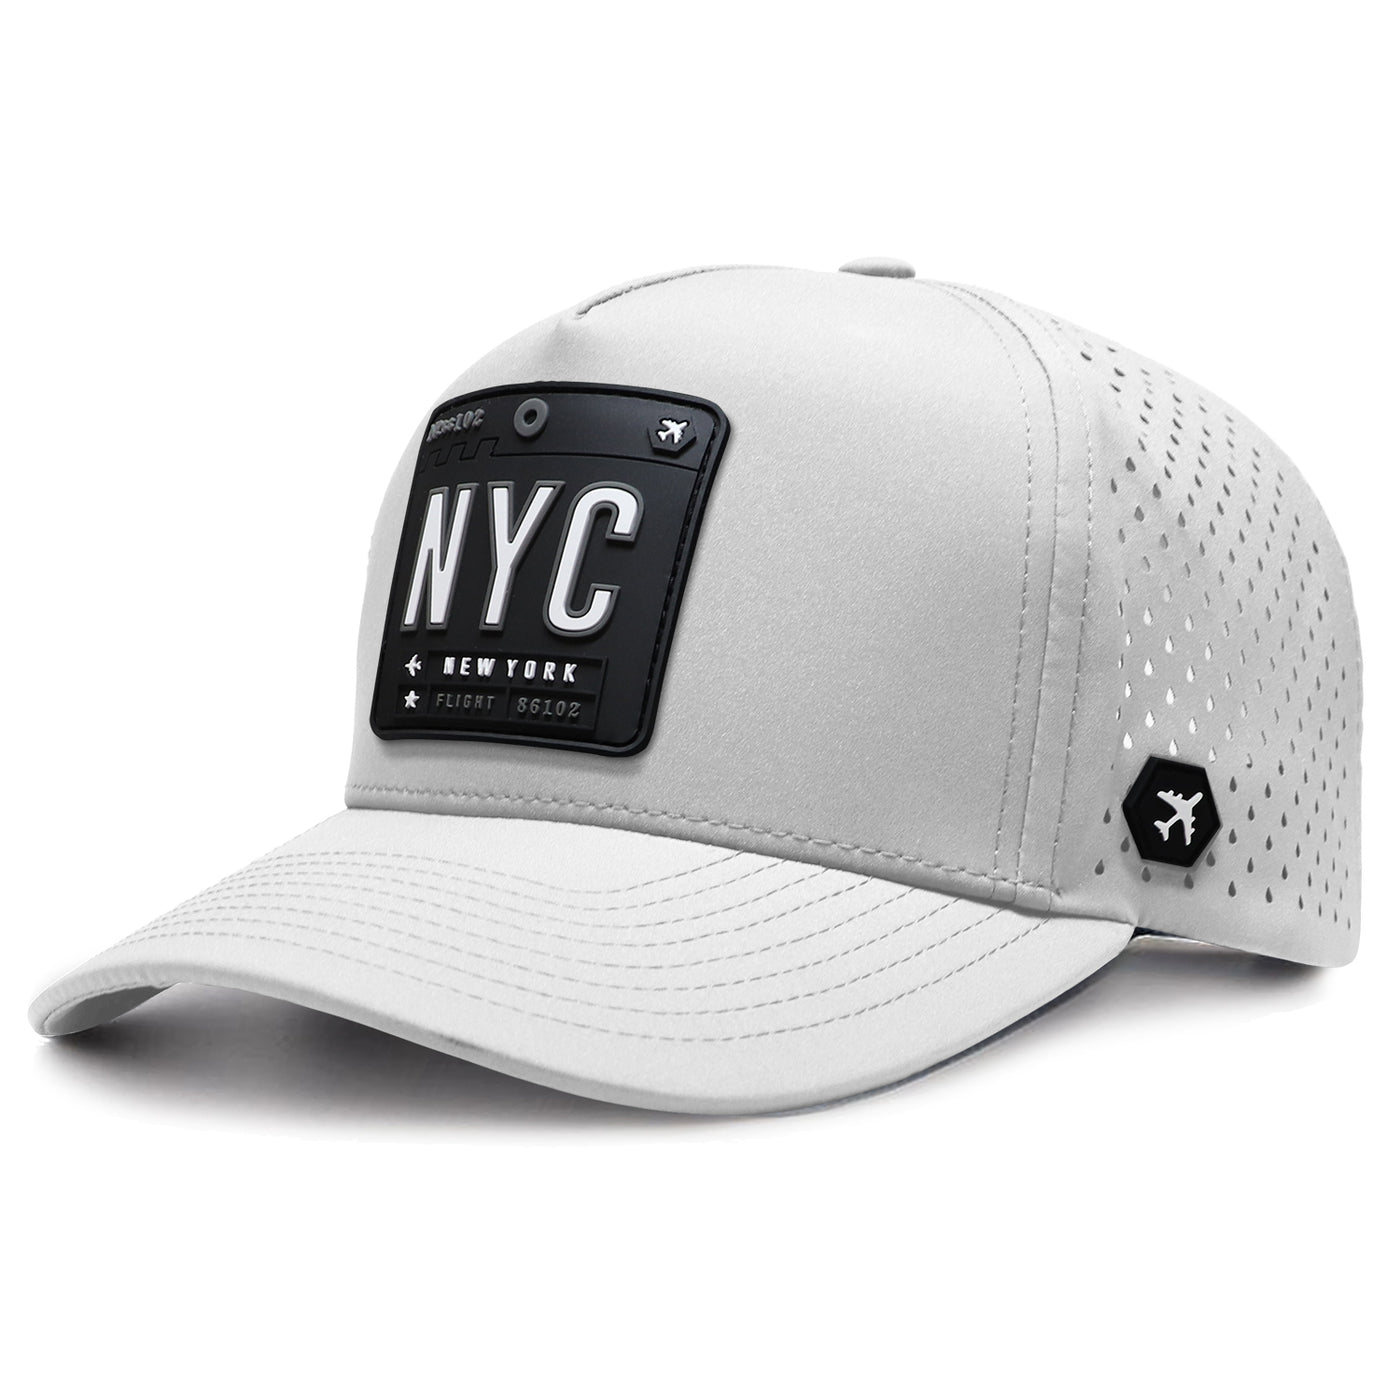 NYC - New York Performance Hat